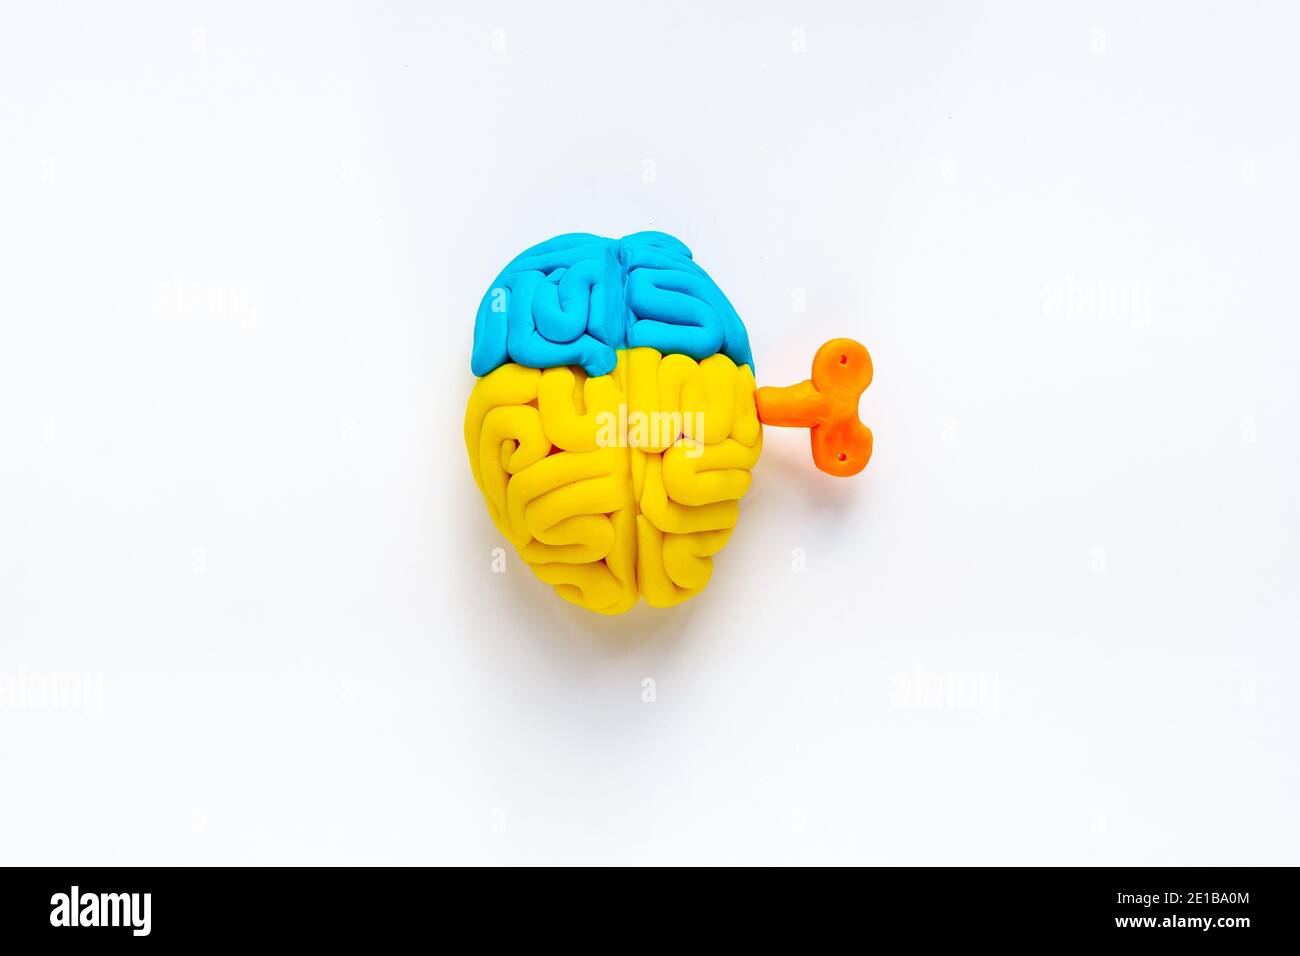 Ideenkonzept. Arbeit des Gehirns - Modell aus buntem Ton, Draufsicht Stockfoto